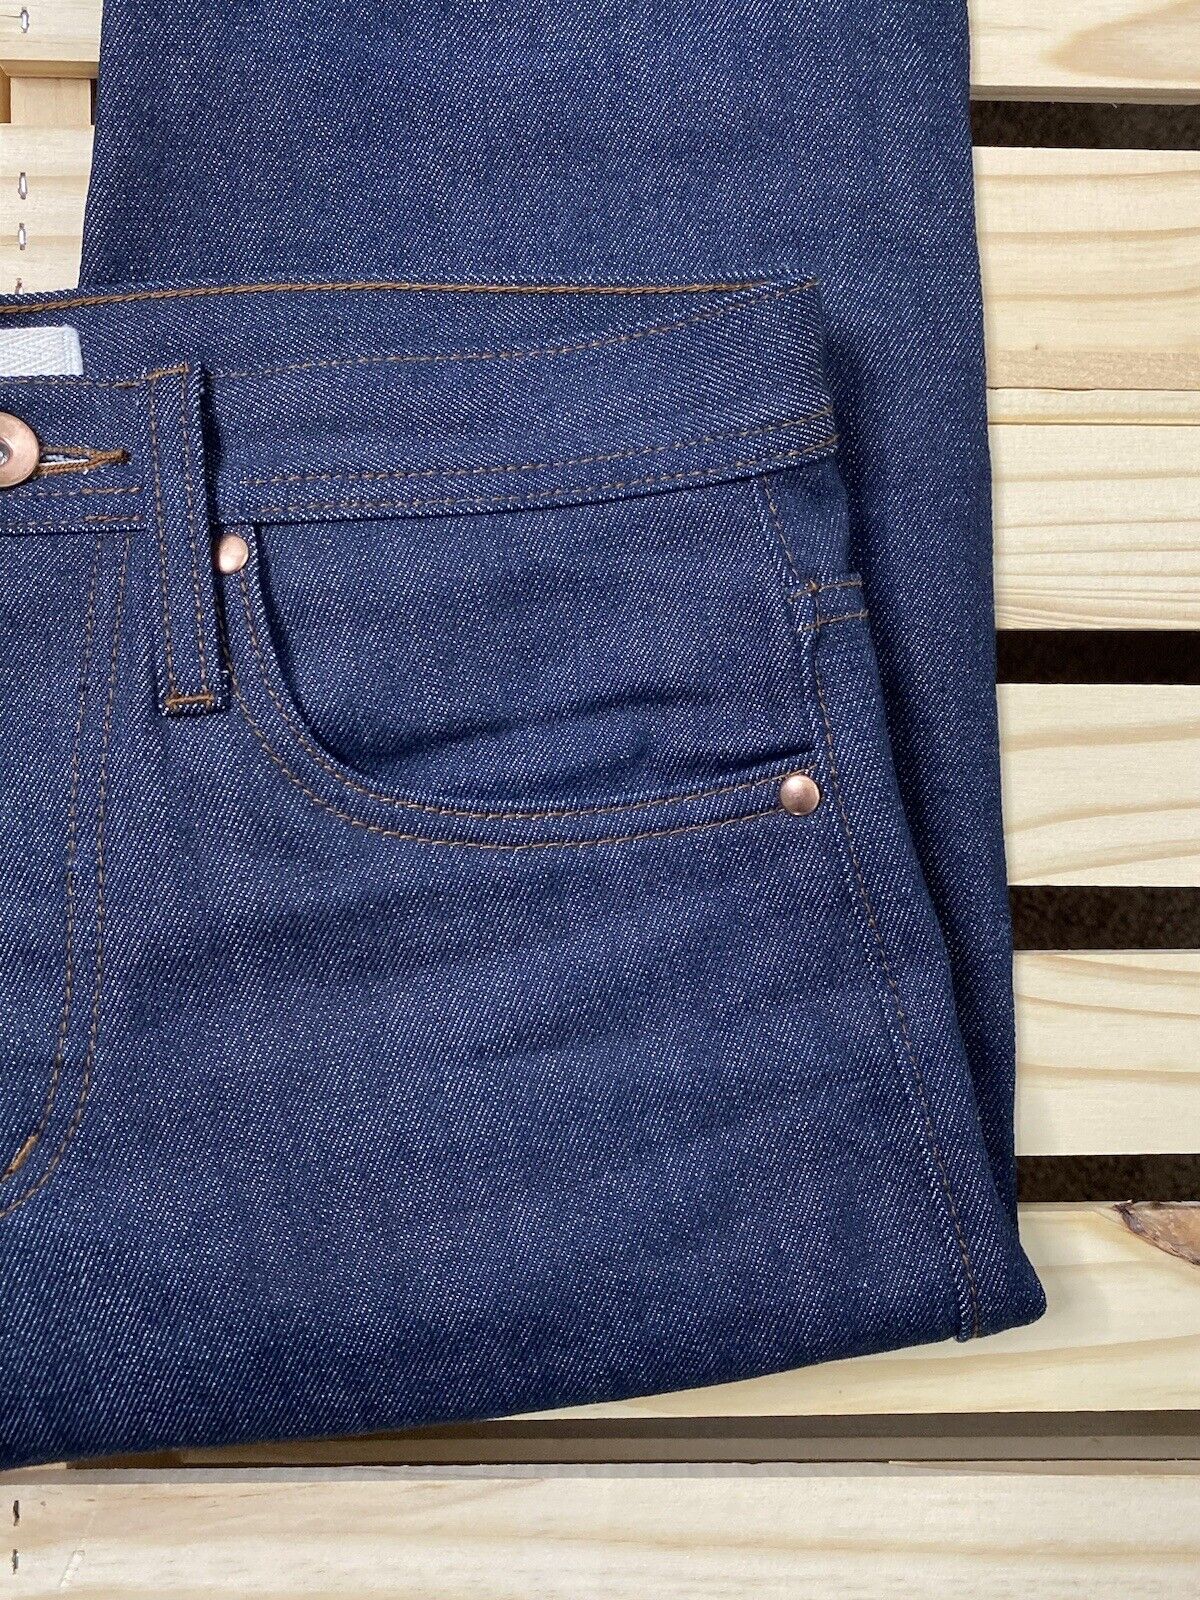 Unbranded Brand Jeans Men 29x33 (31x33) Blue 14.5… - image 2